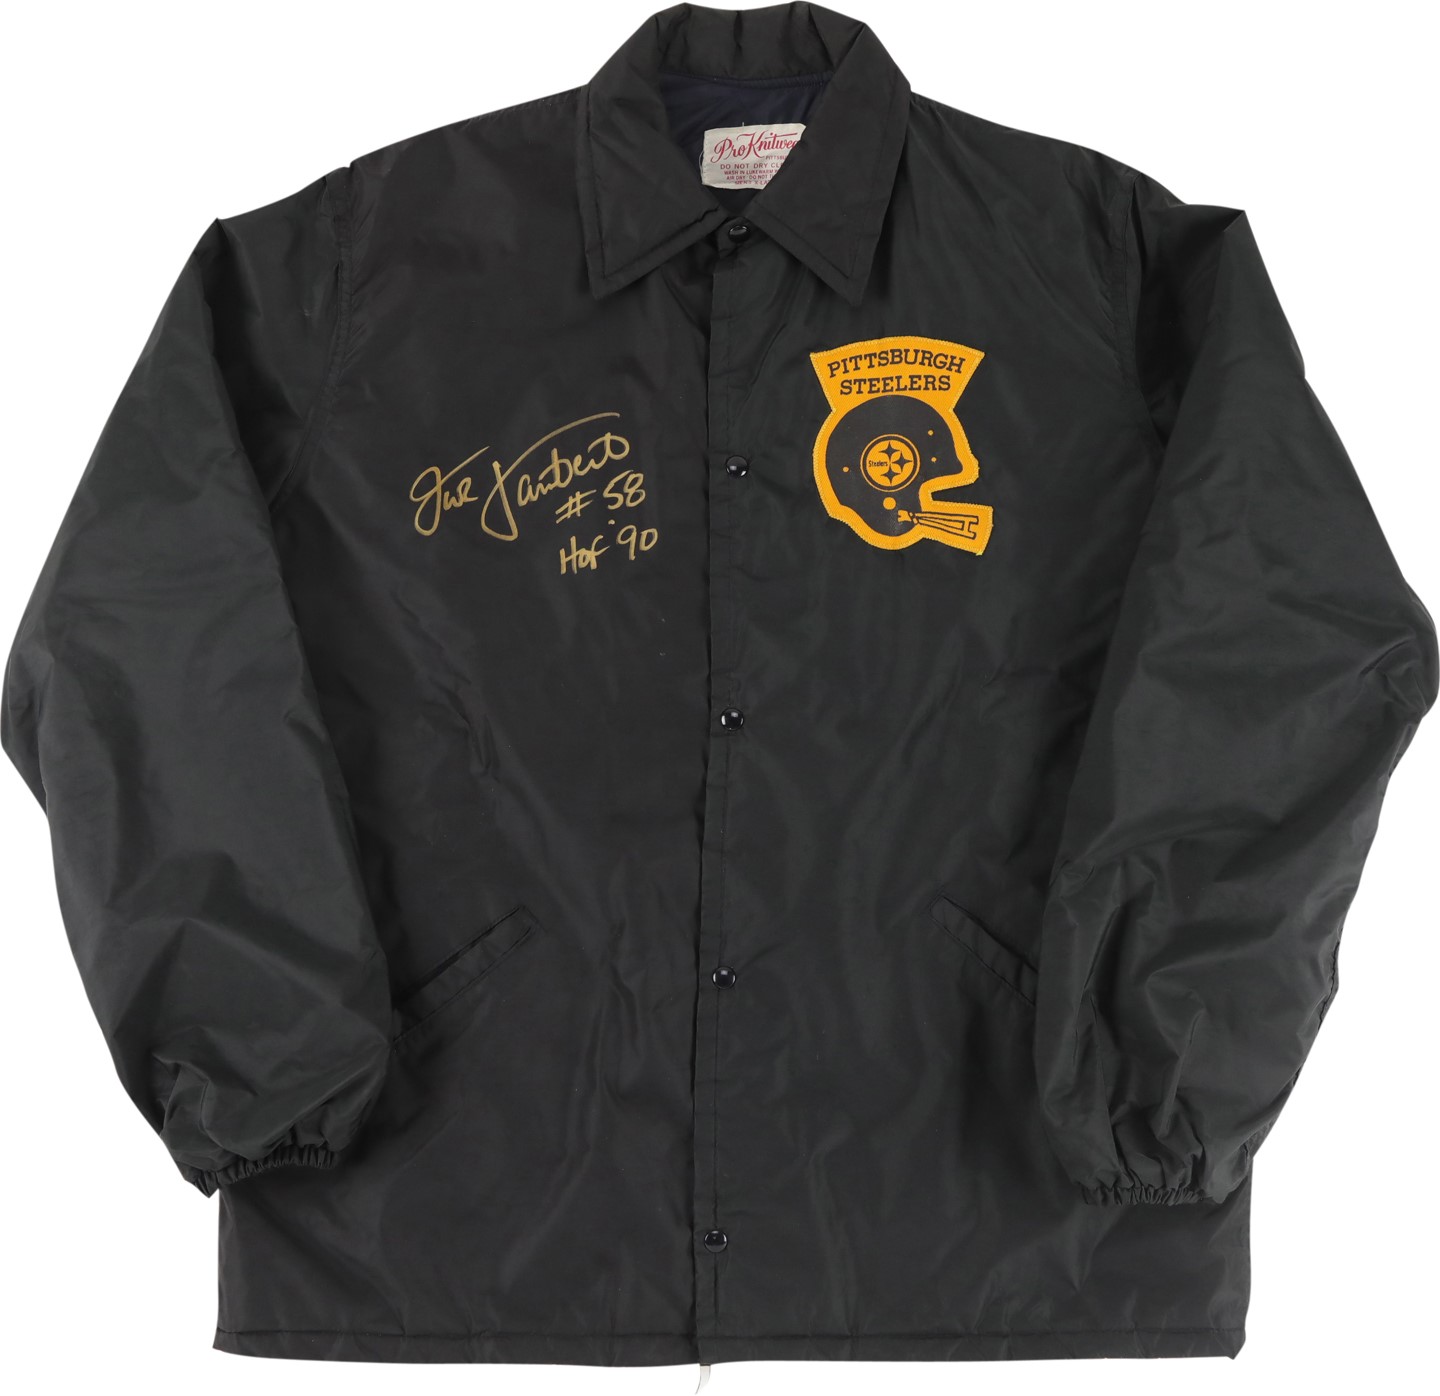 The Jack Lambert Collection - 1970s Jack Lambert Pittsburgh Steelers Jacket